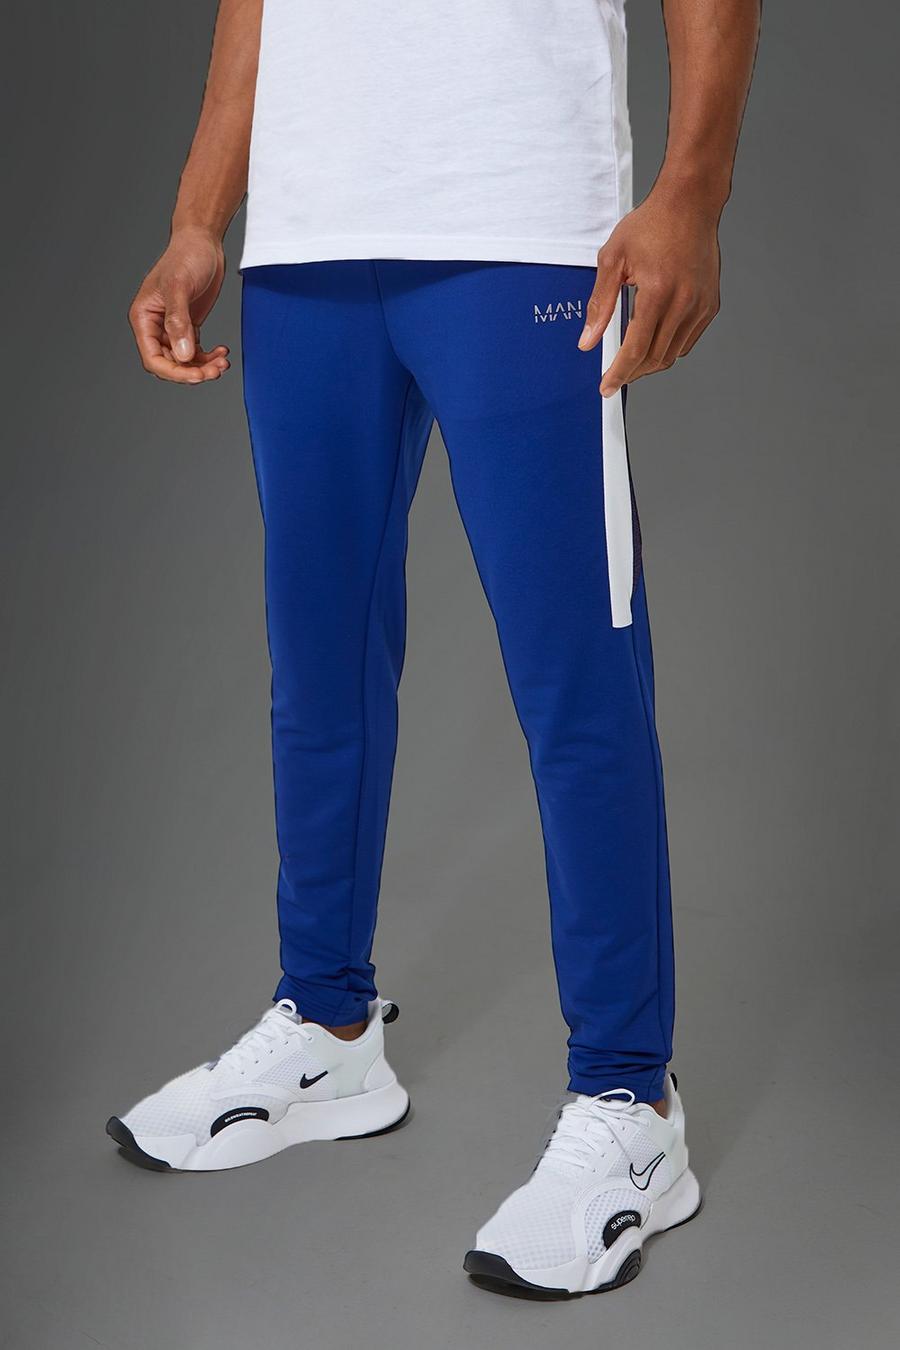 Navy blu oltremare מכנסי טרנינג ספורטיביים לאימונים עם פאנל ודוגמה מסדרת Man image number 1